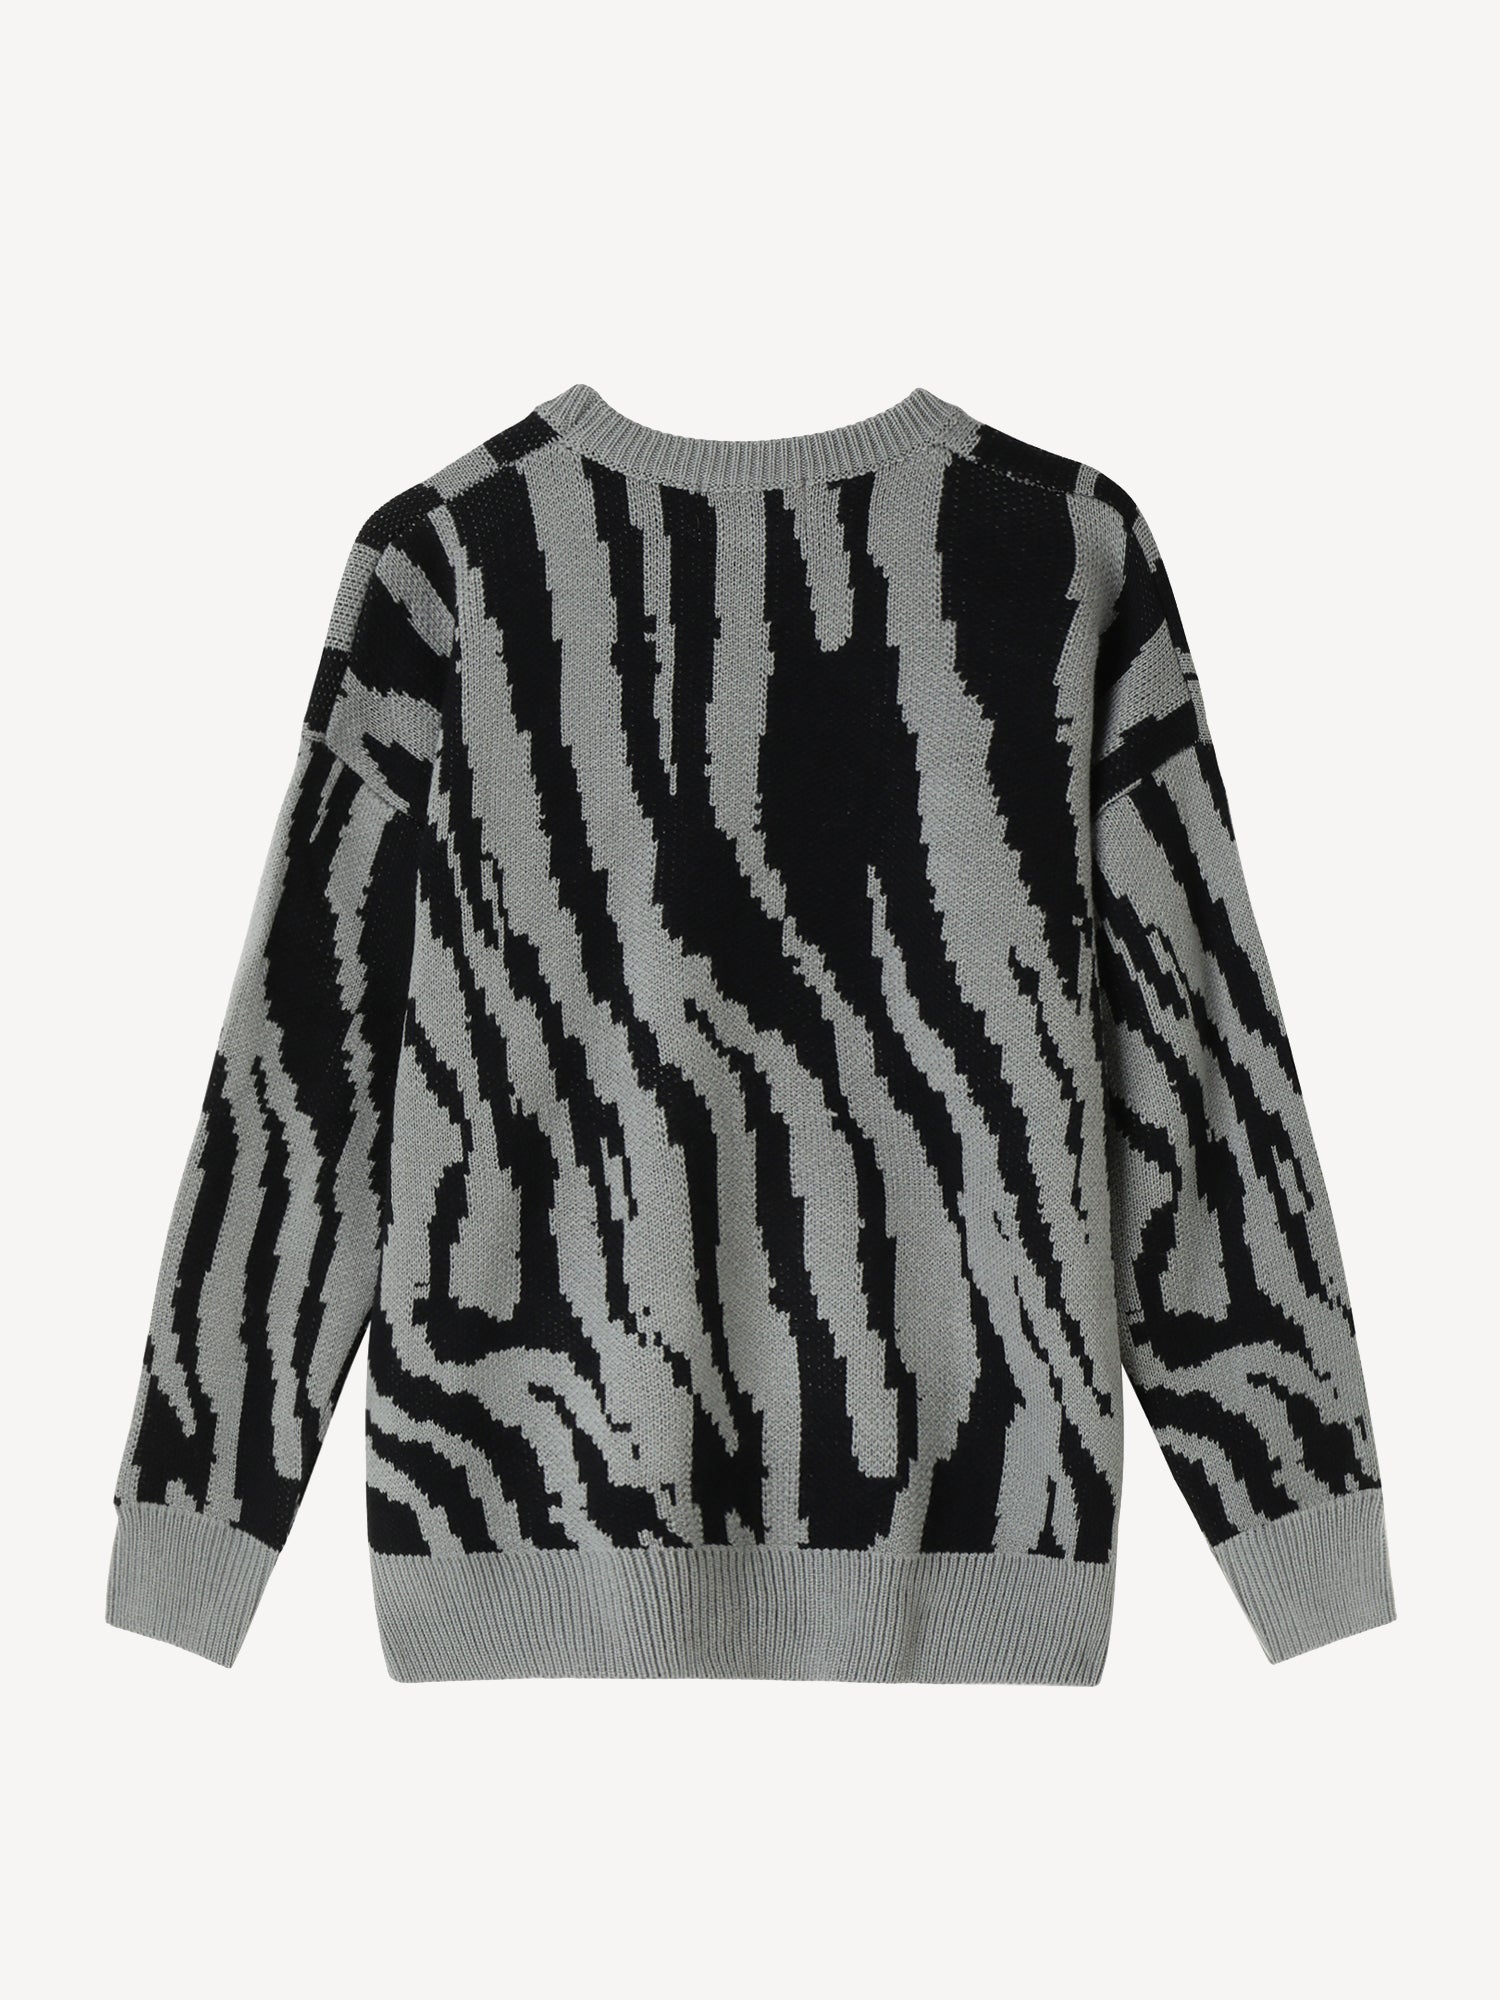 JUSTNOTAG Vintage Zebra Pattern Knitted Sweater